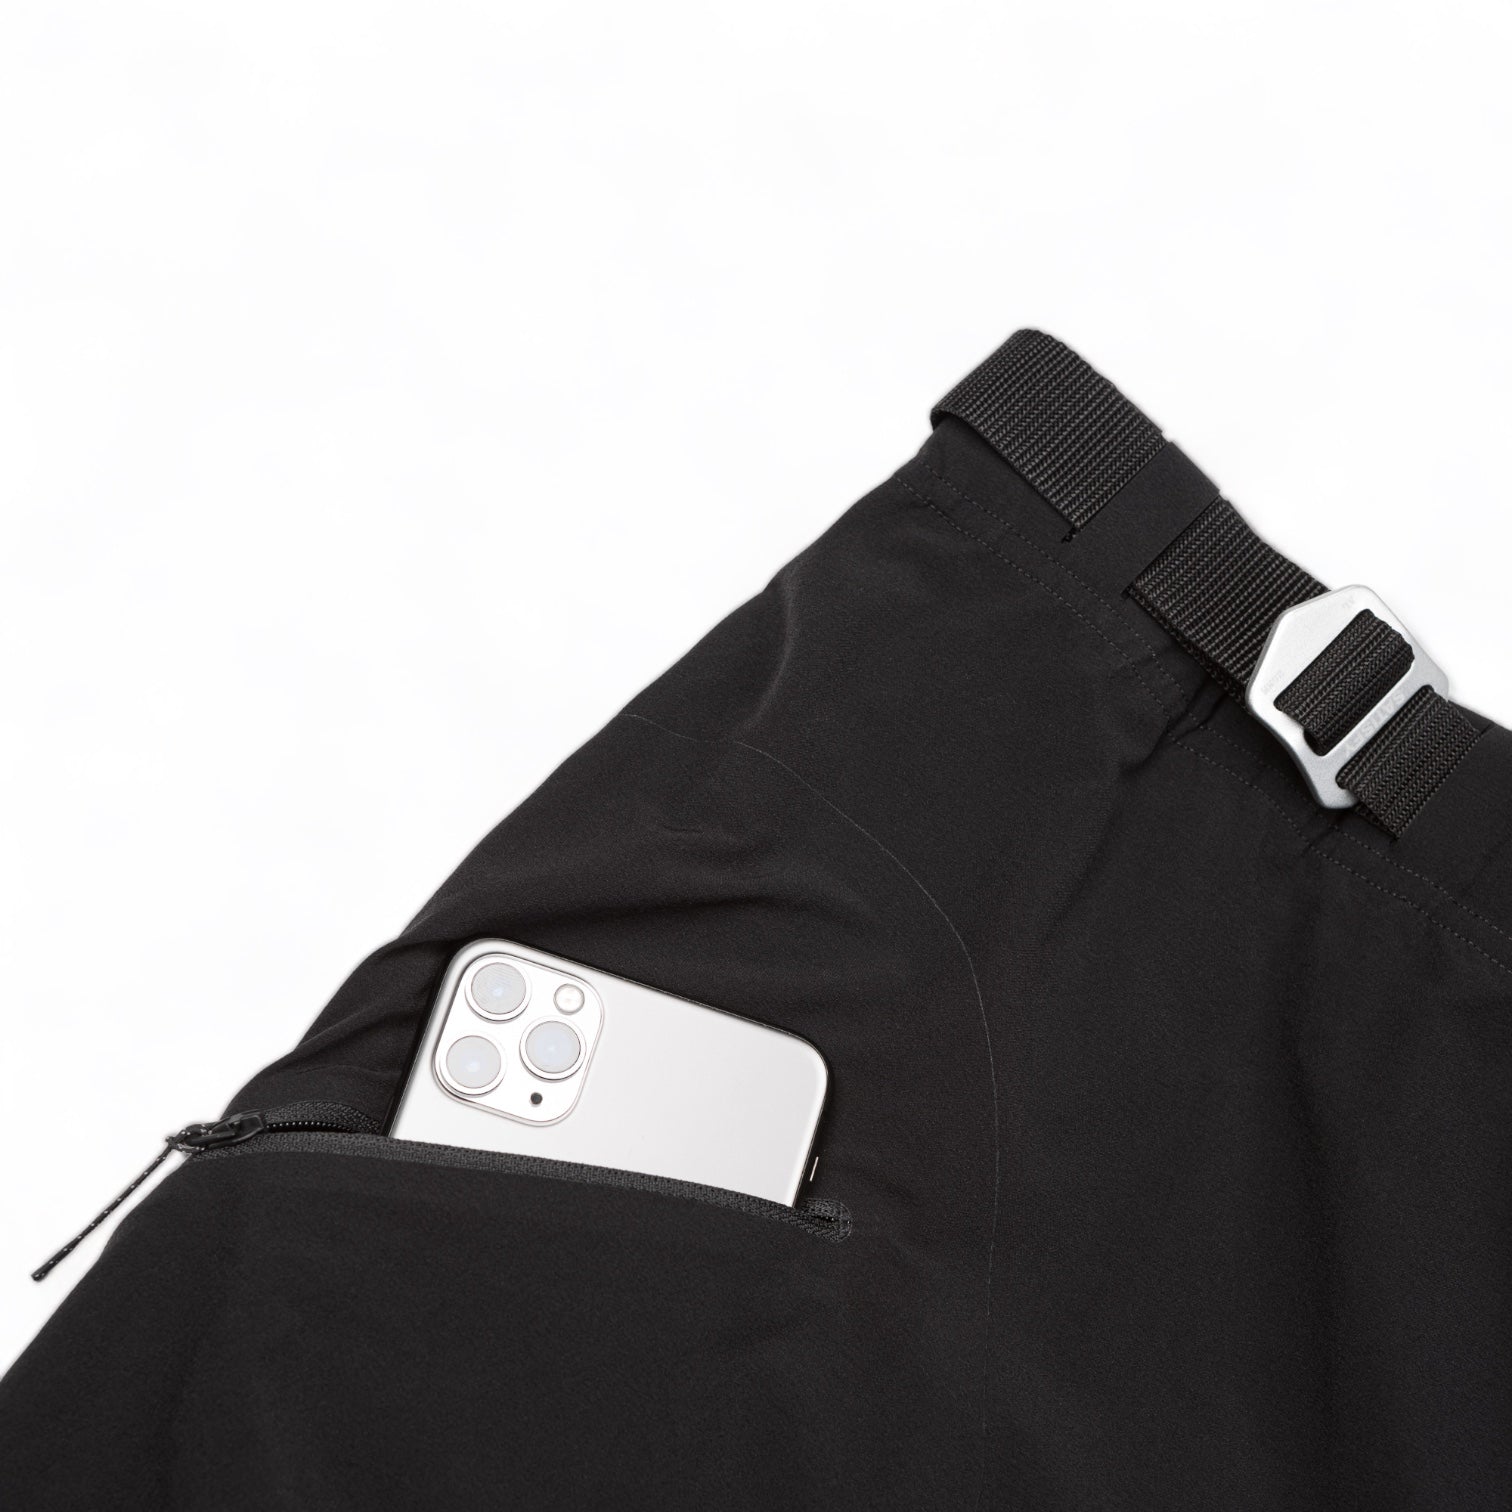 Satisfy - PeaceShell™ Technical Climb Pants (Black)